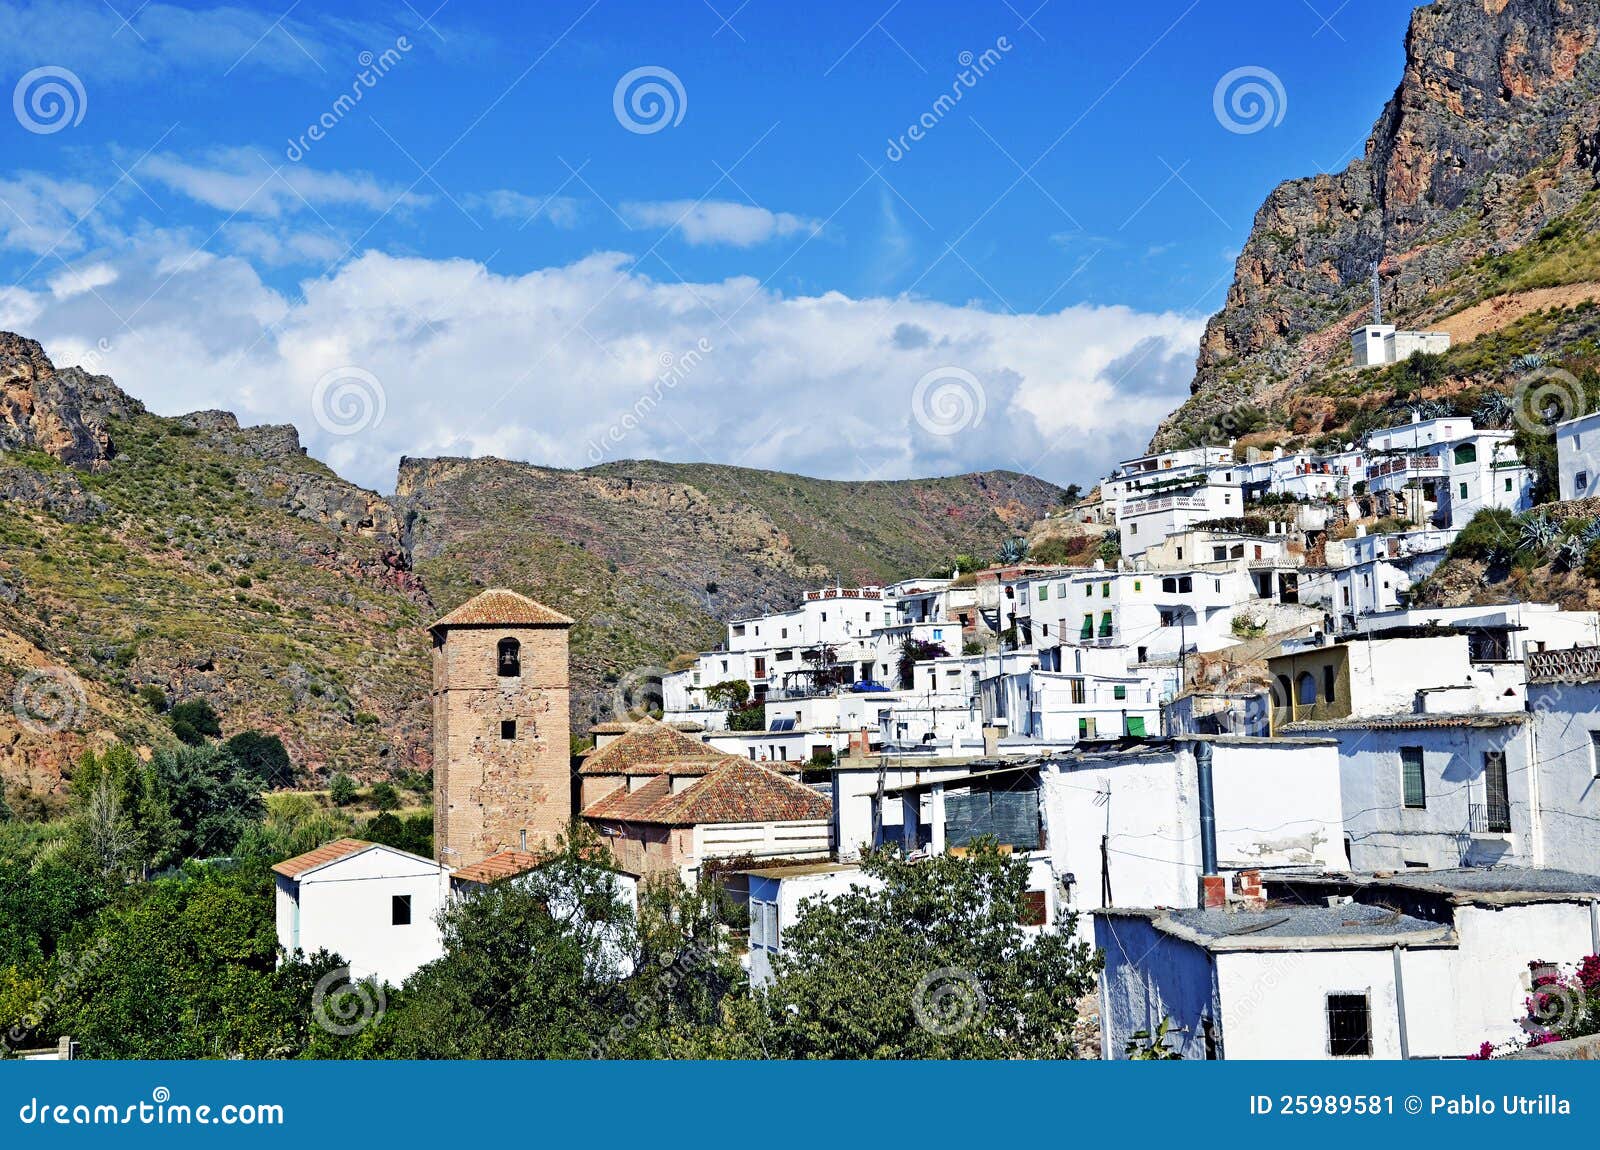 overview of small moorish village in la alpujarra